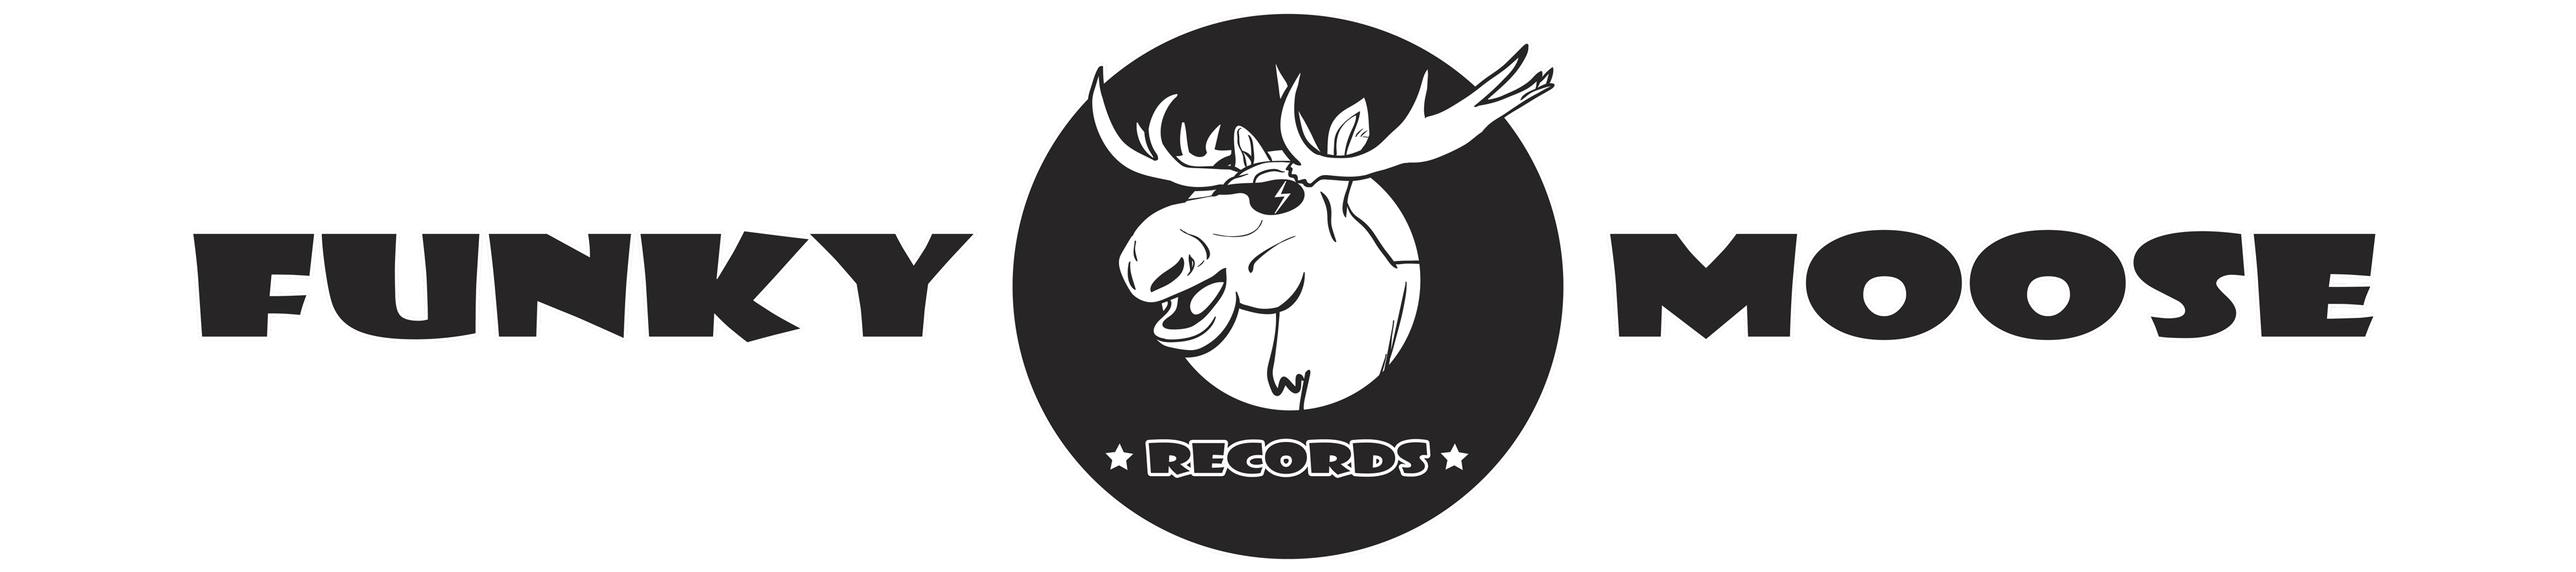 Funky Moose Records logo